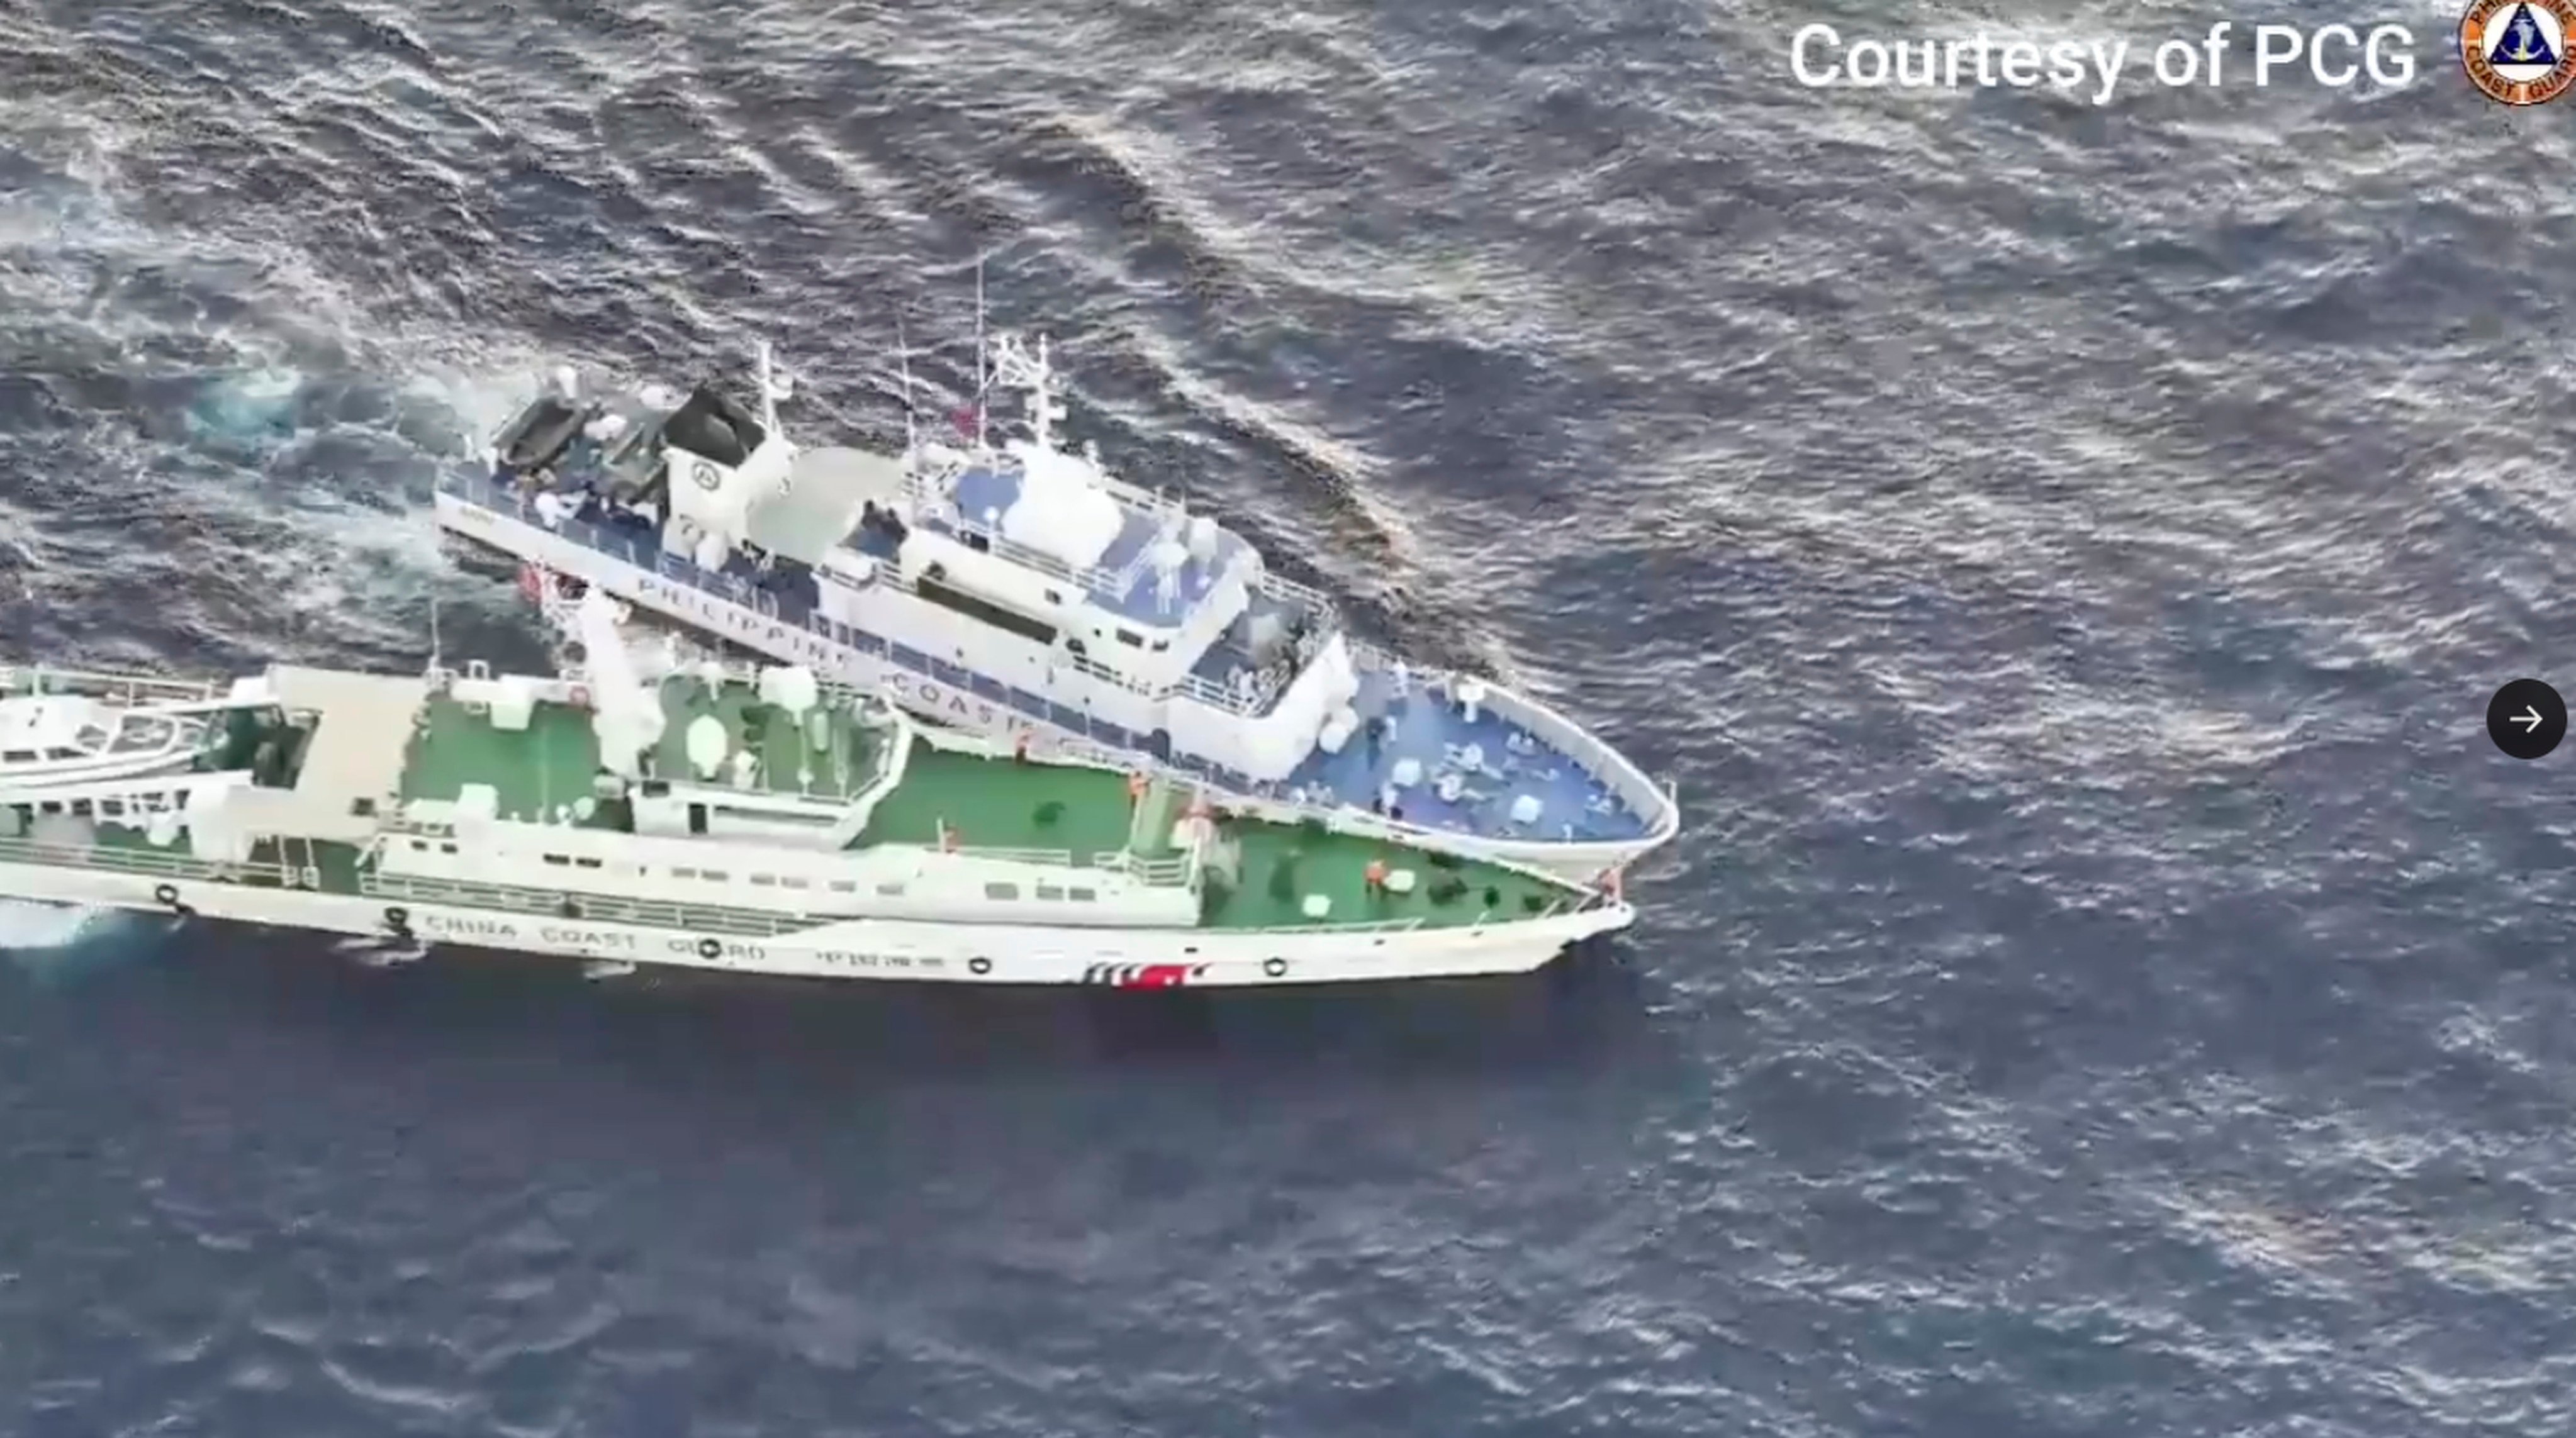 The two coastguard ships collided on Tuesday morning near Second Thomas Shoal. Photo: X/ MenchOsint